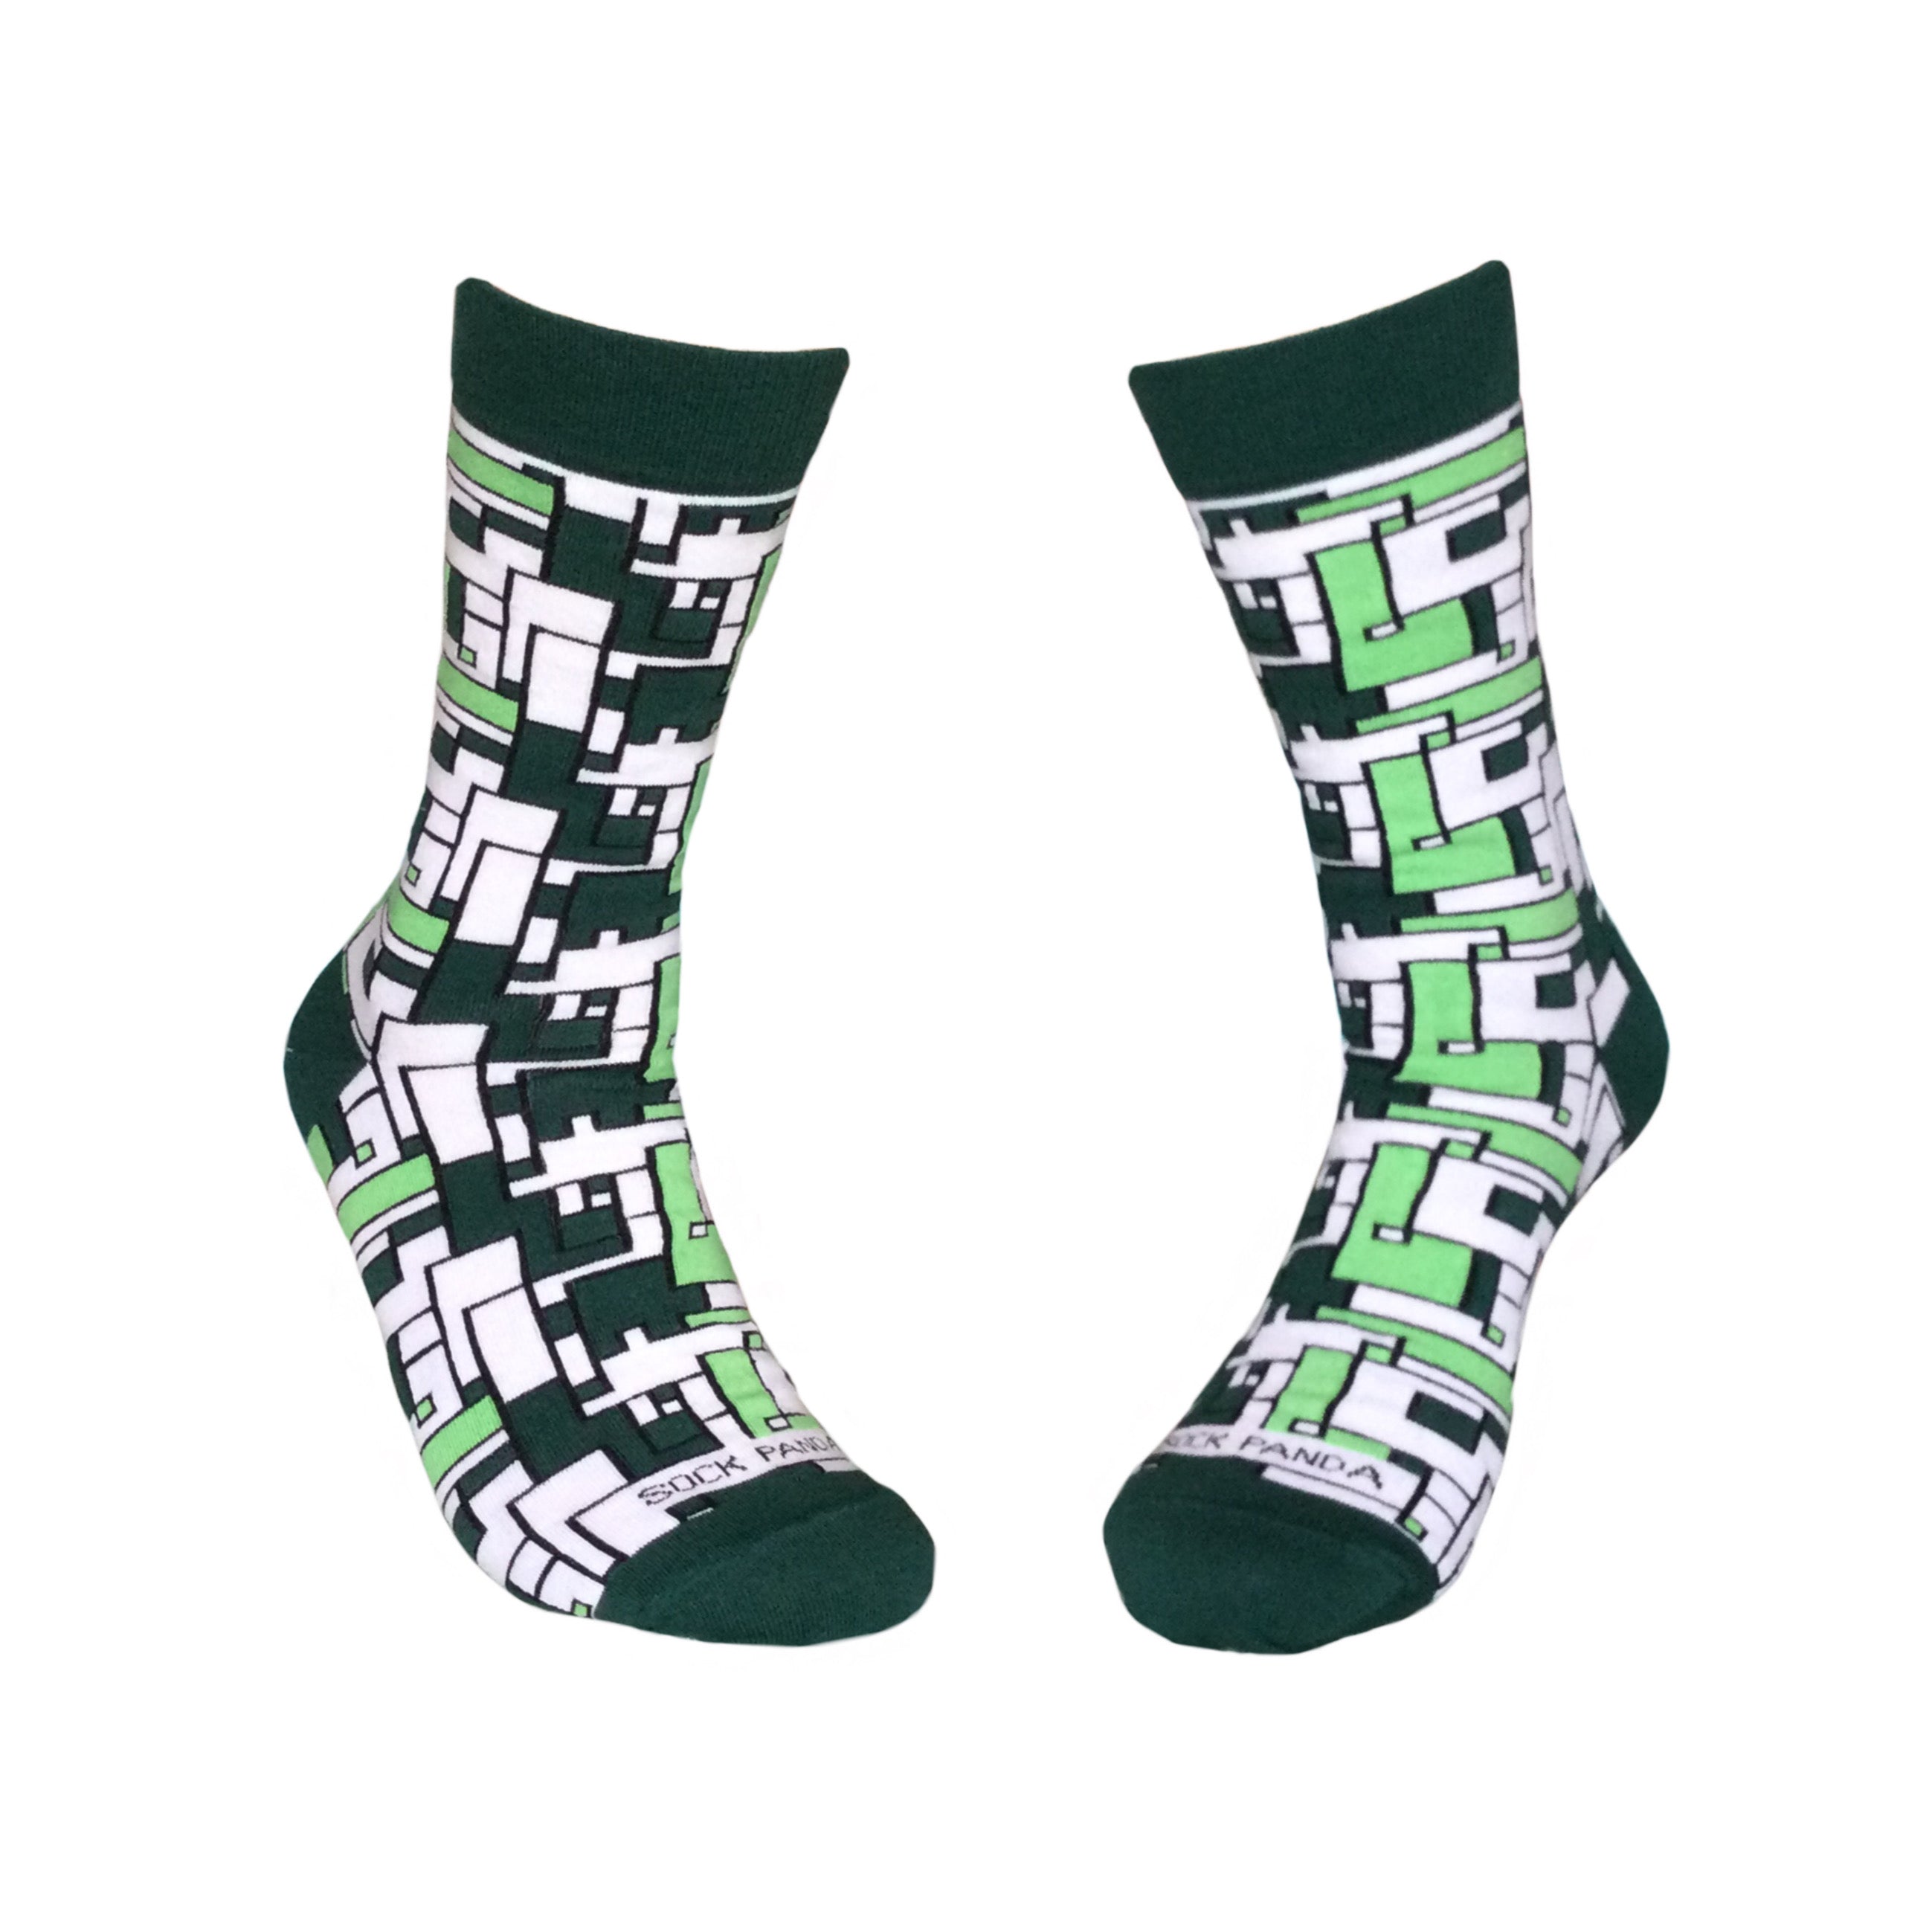 Green Tetris Patterned Office Socks from the Sock Panda